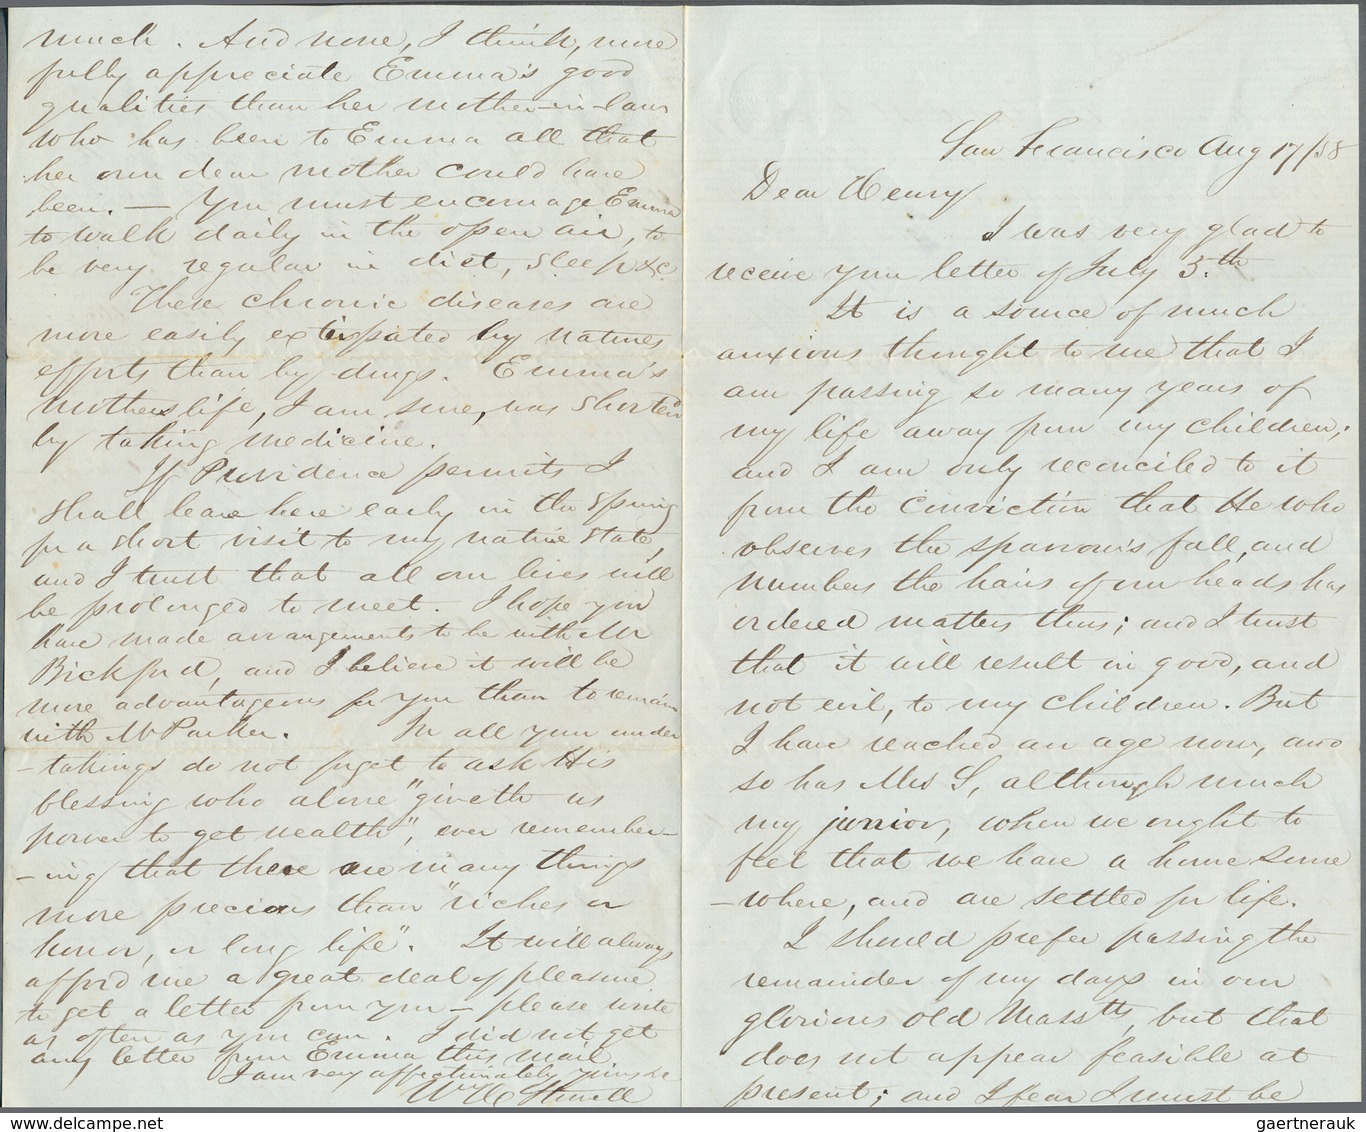 Vereinigte Staaten Von Amerika: 1858, 10 C. Green Tied "SAN FRANCISCO AUG 17 58" To Small Envelope E - Briefe U. Dokumente